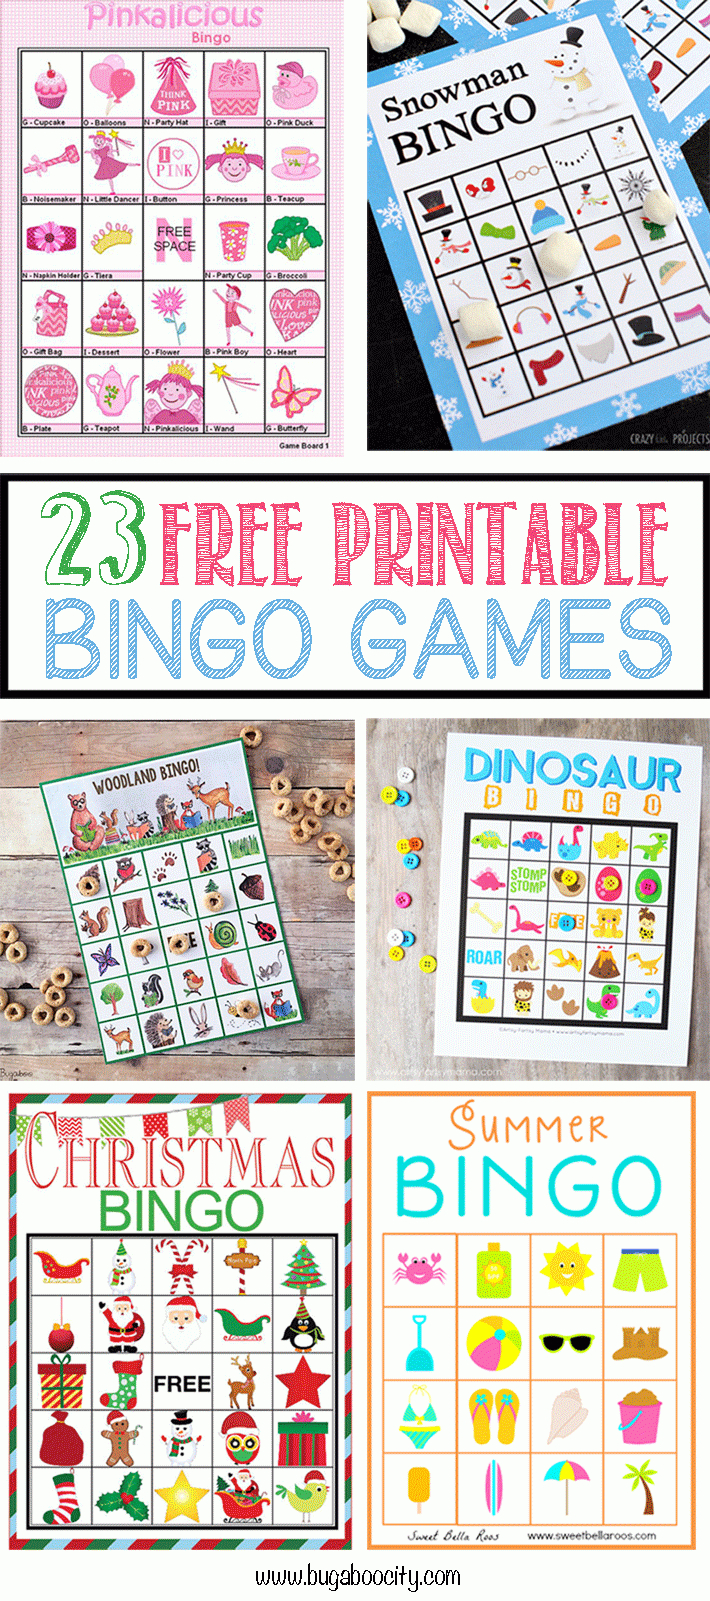 23 Free Printable Bingo Games | Bugaboocity Blog | Bingo, Bingo - Free Printable Bingo